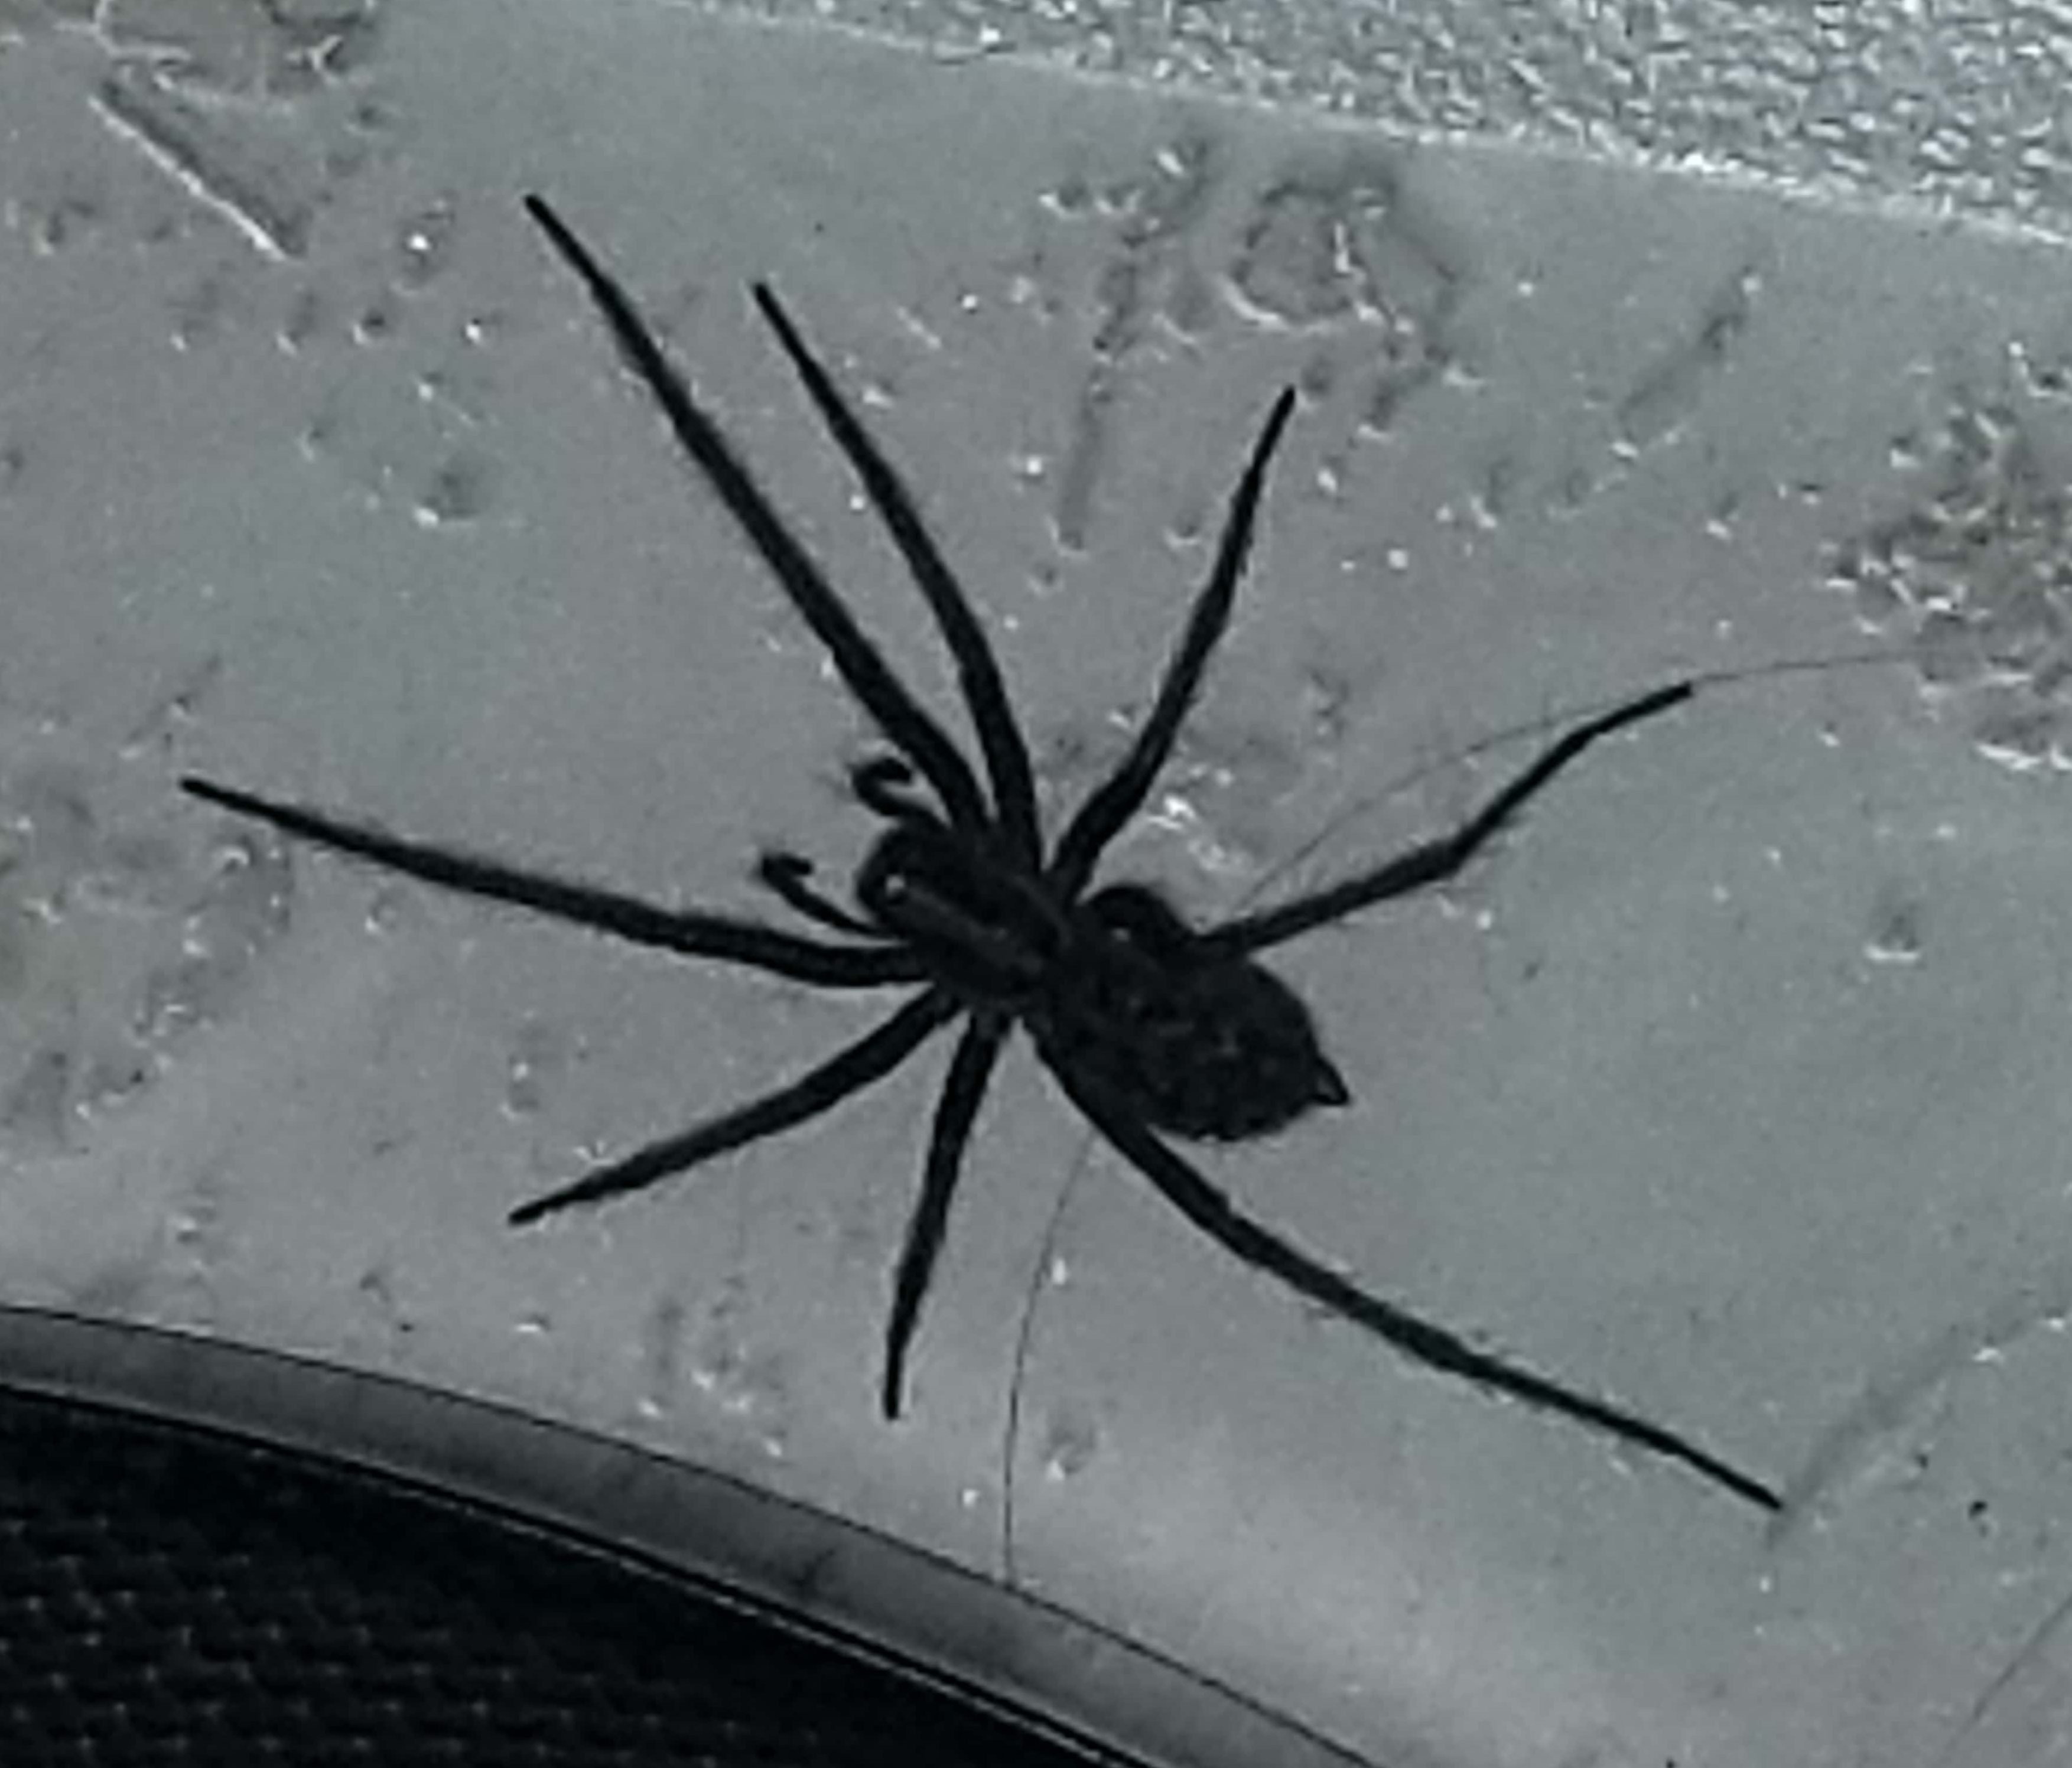 Picture of Eratigena atrica (Giant House Spider) - Dorsal